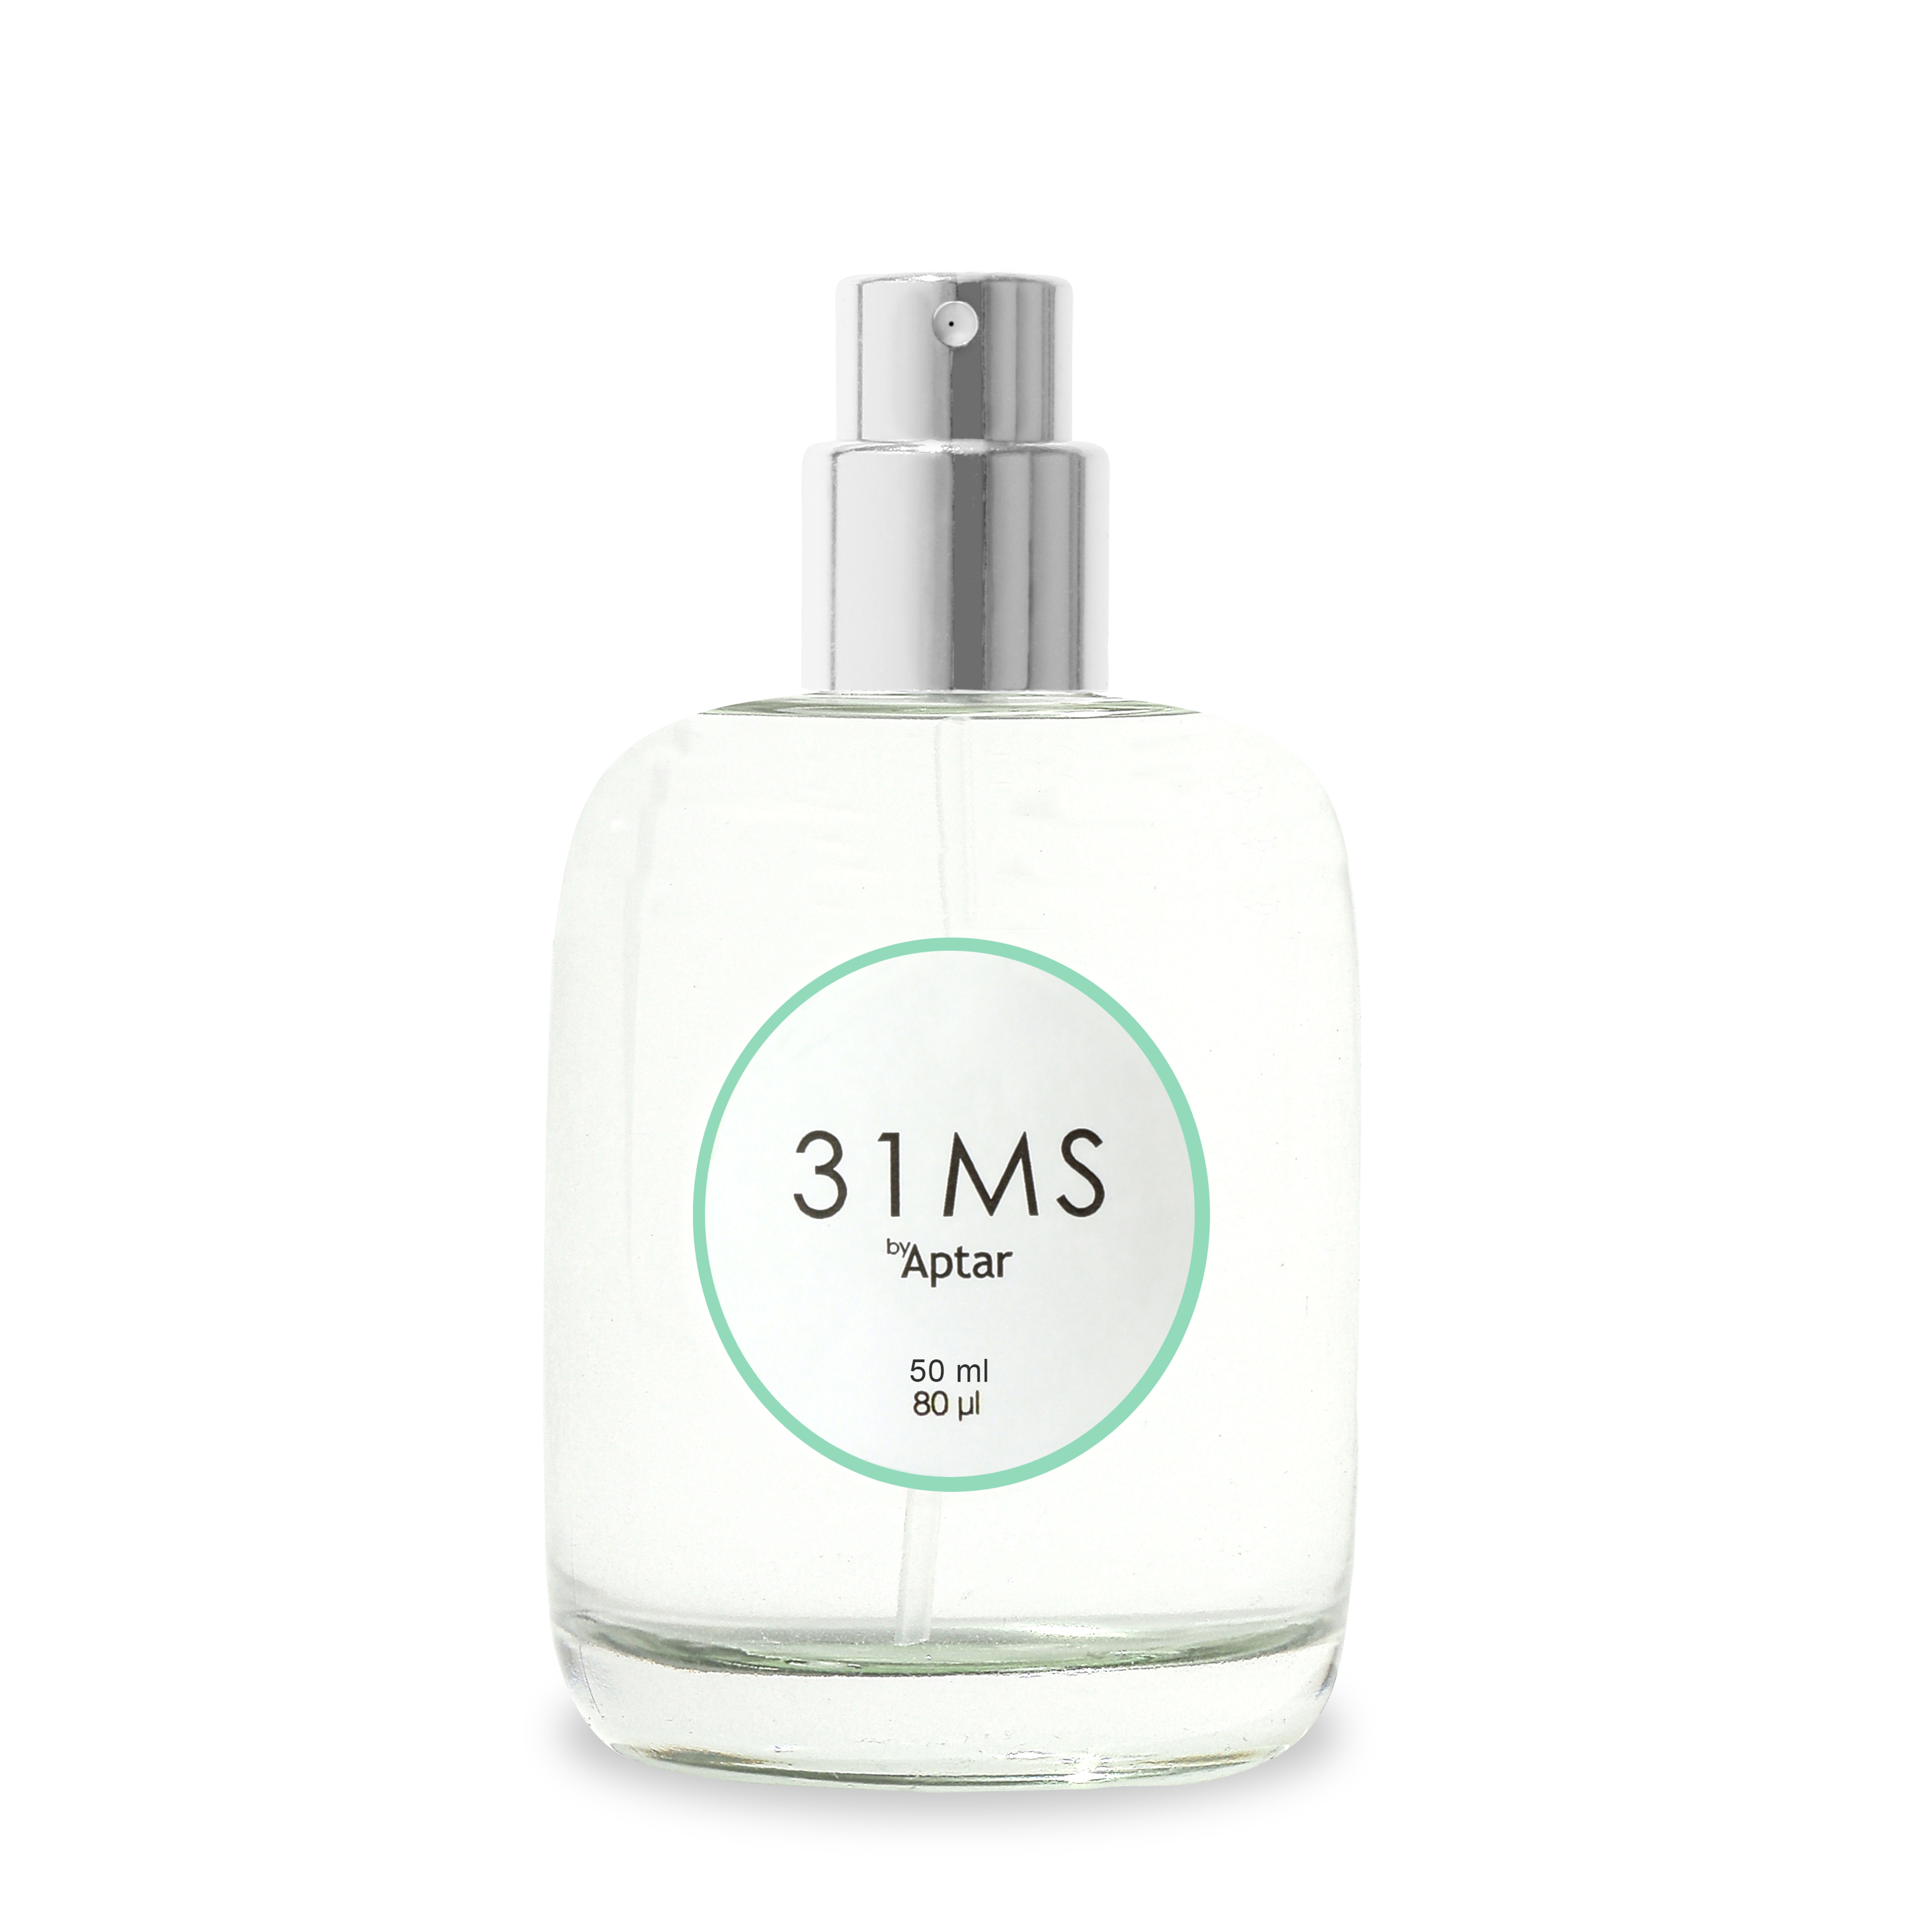 31 MS Fragrance Spray Pump